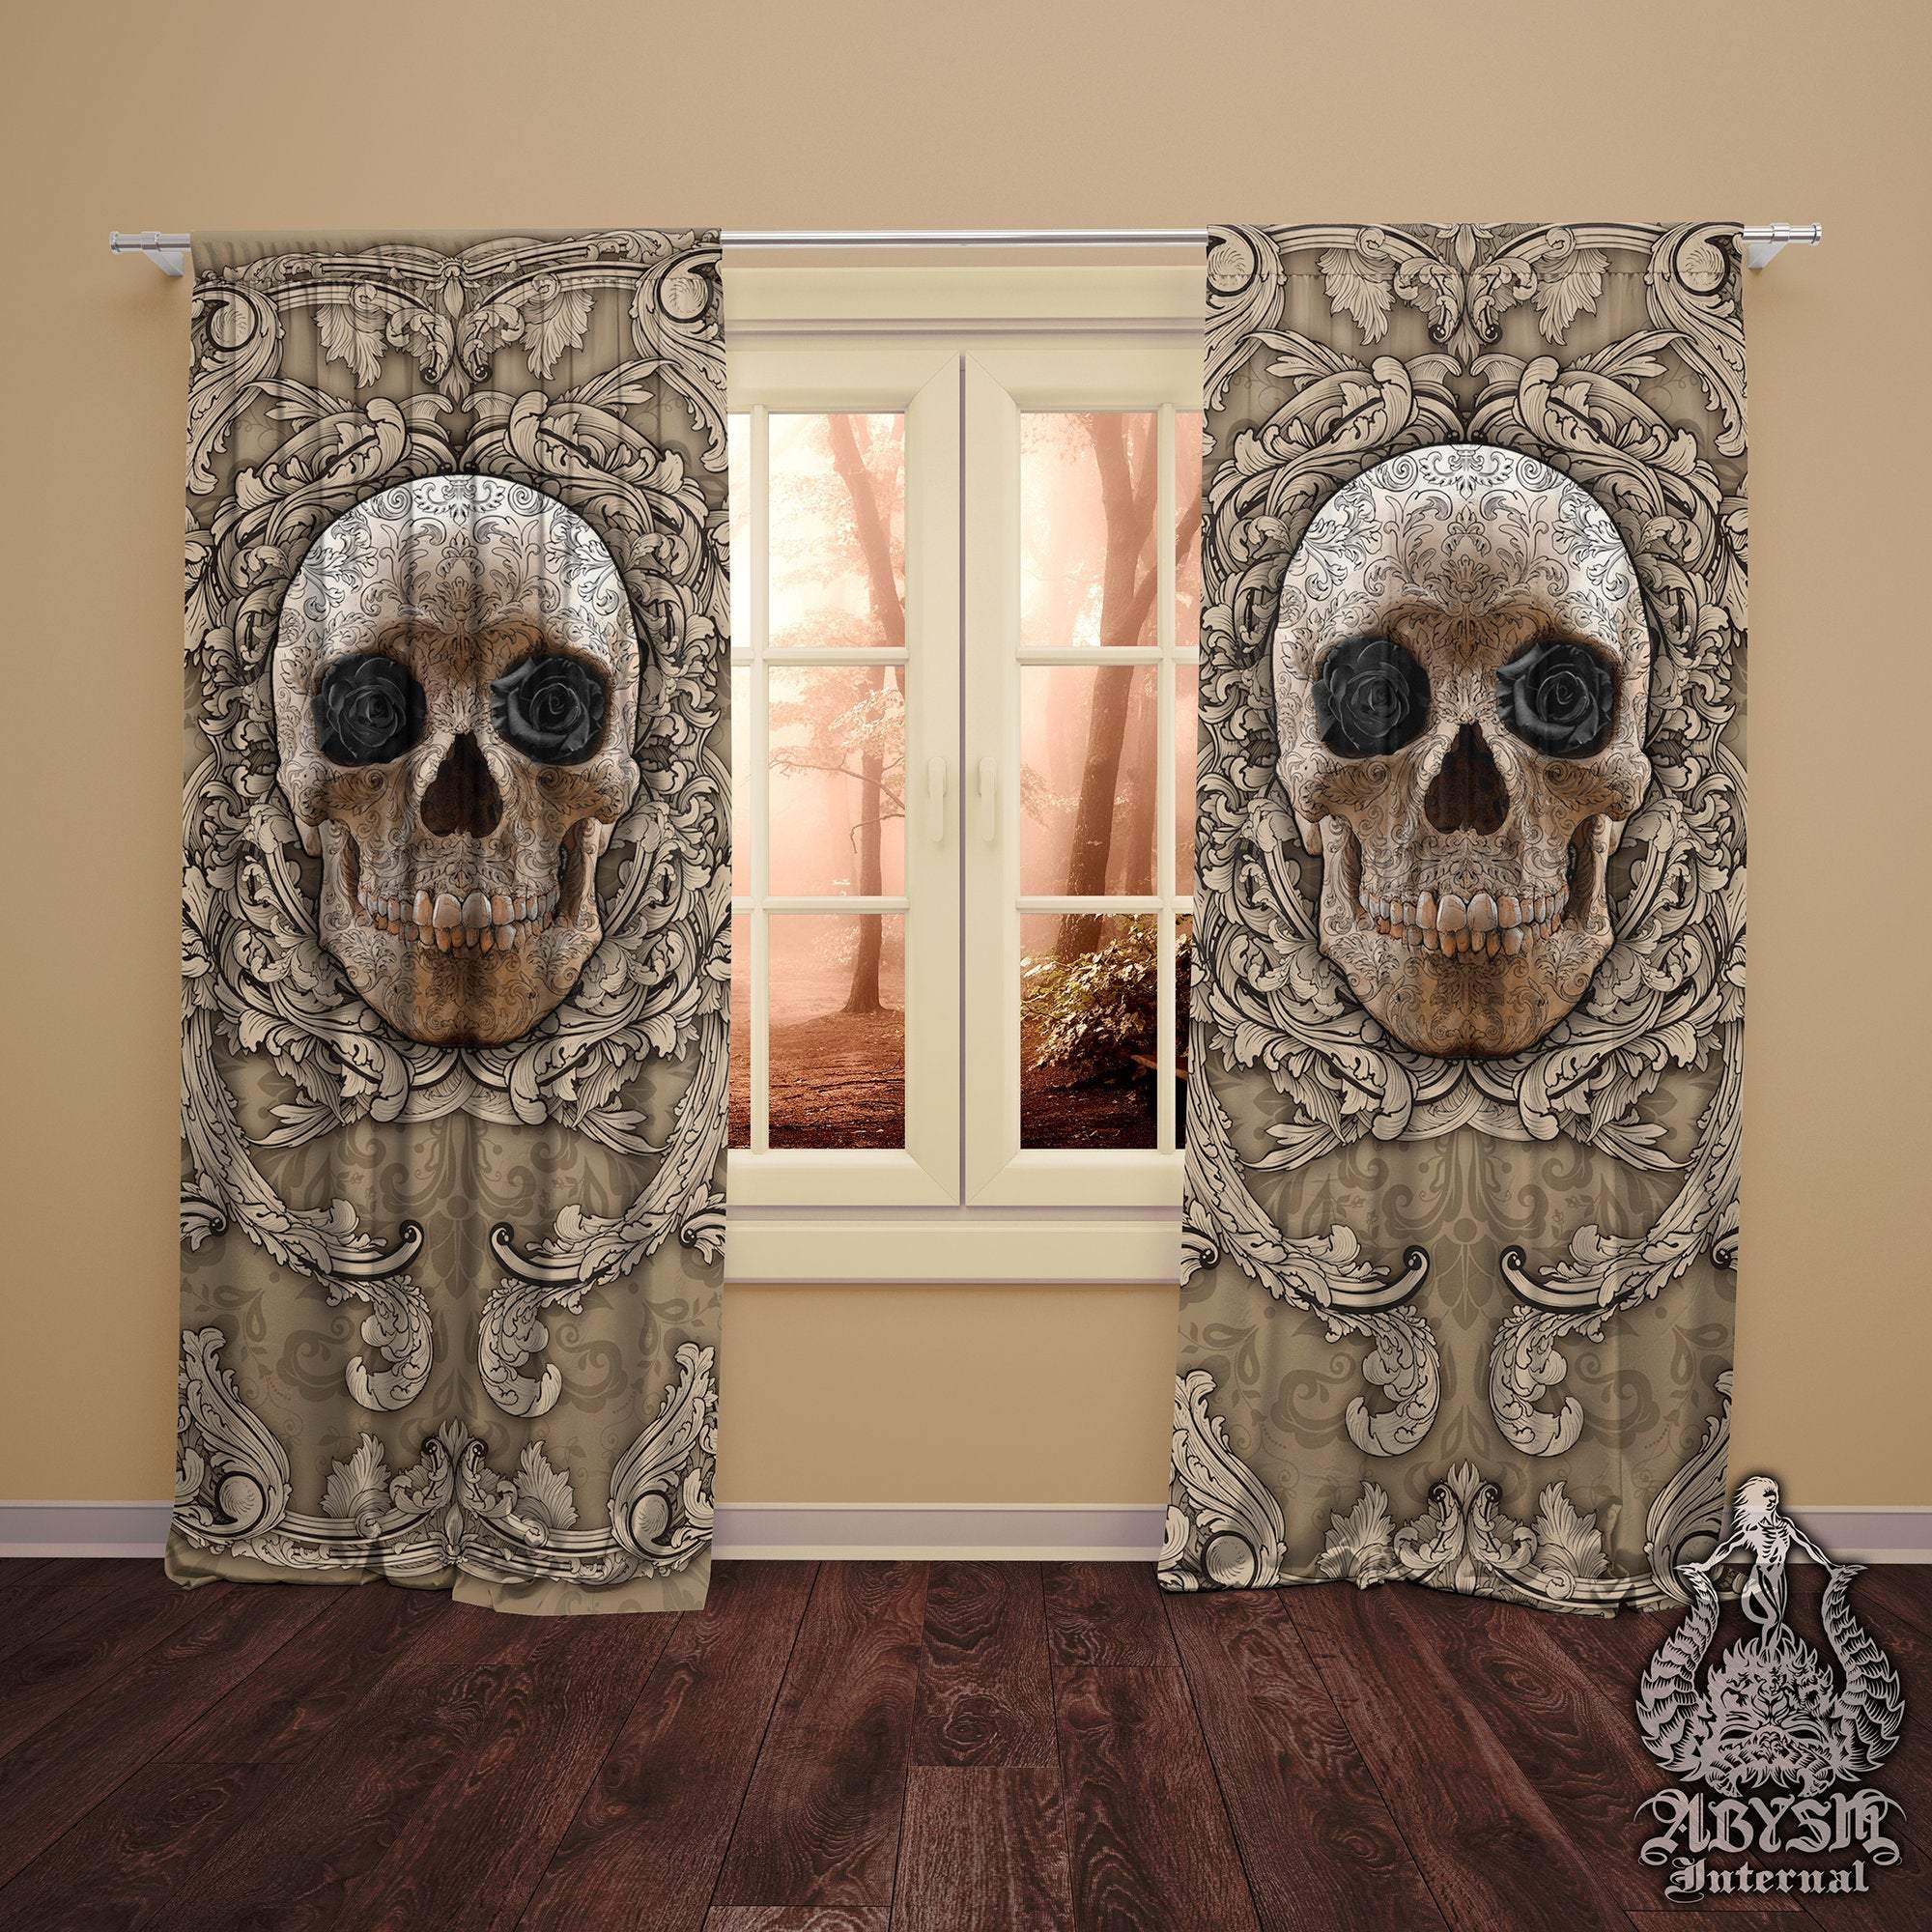 Skull Blackout Curtains, Long Window Panels, Macabre Art Print, Goth Home Decor - Cream, Black Roses - Abysm Internal